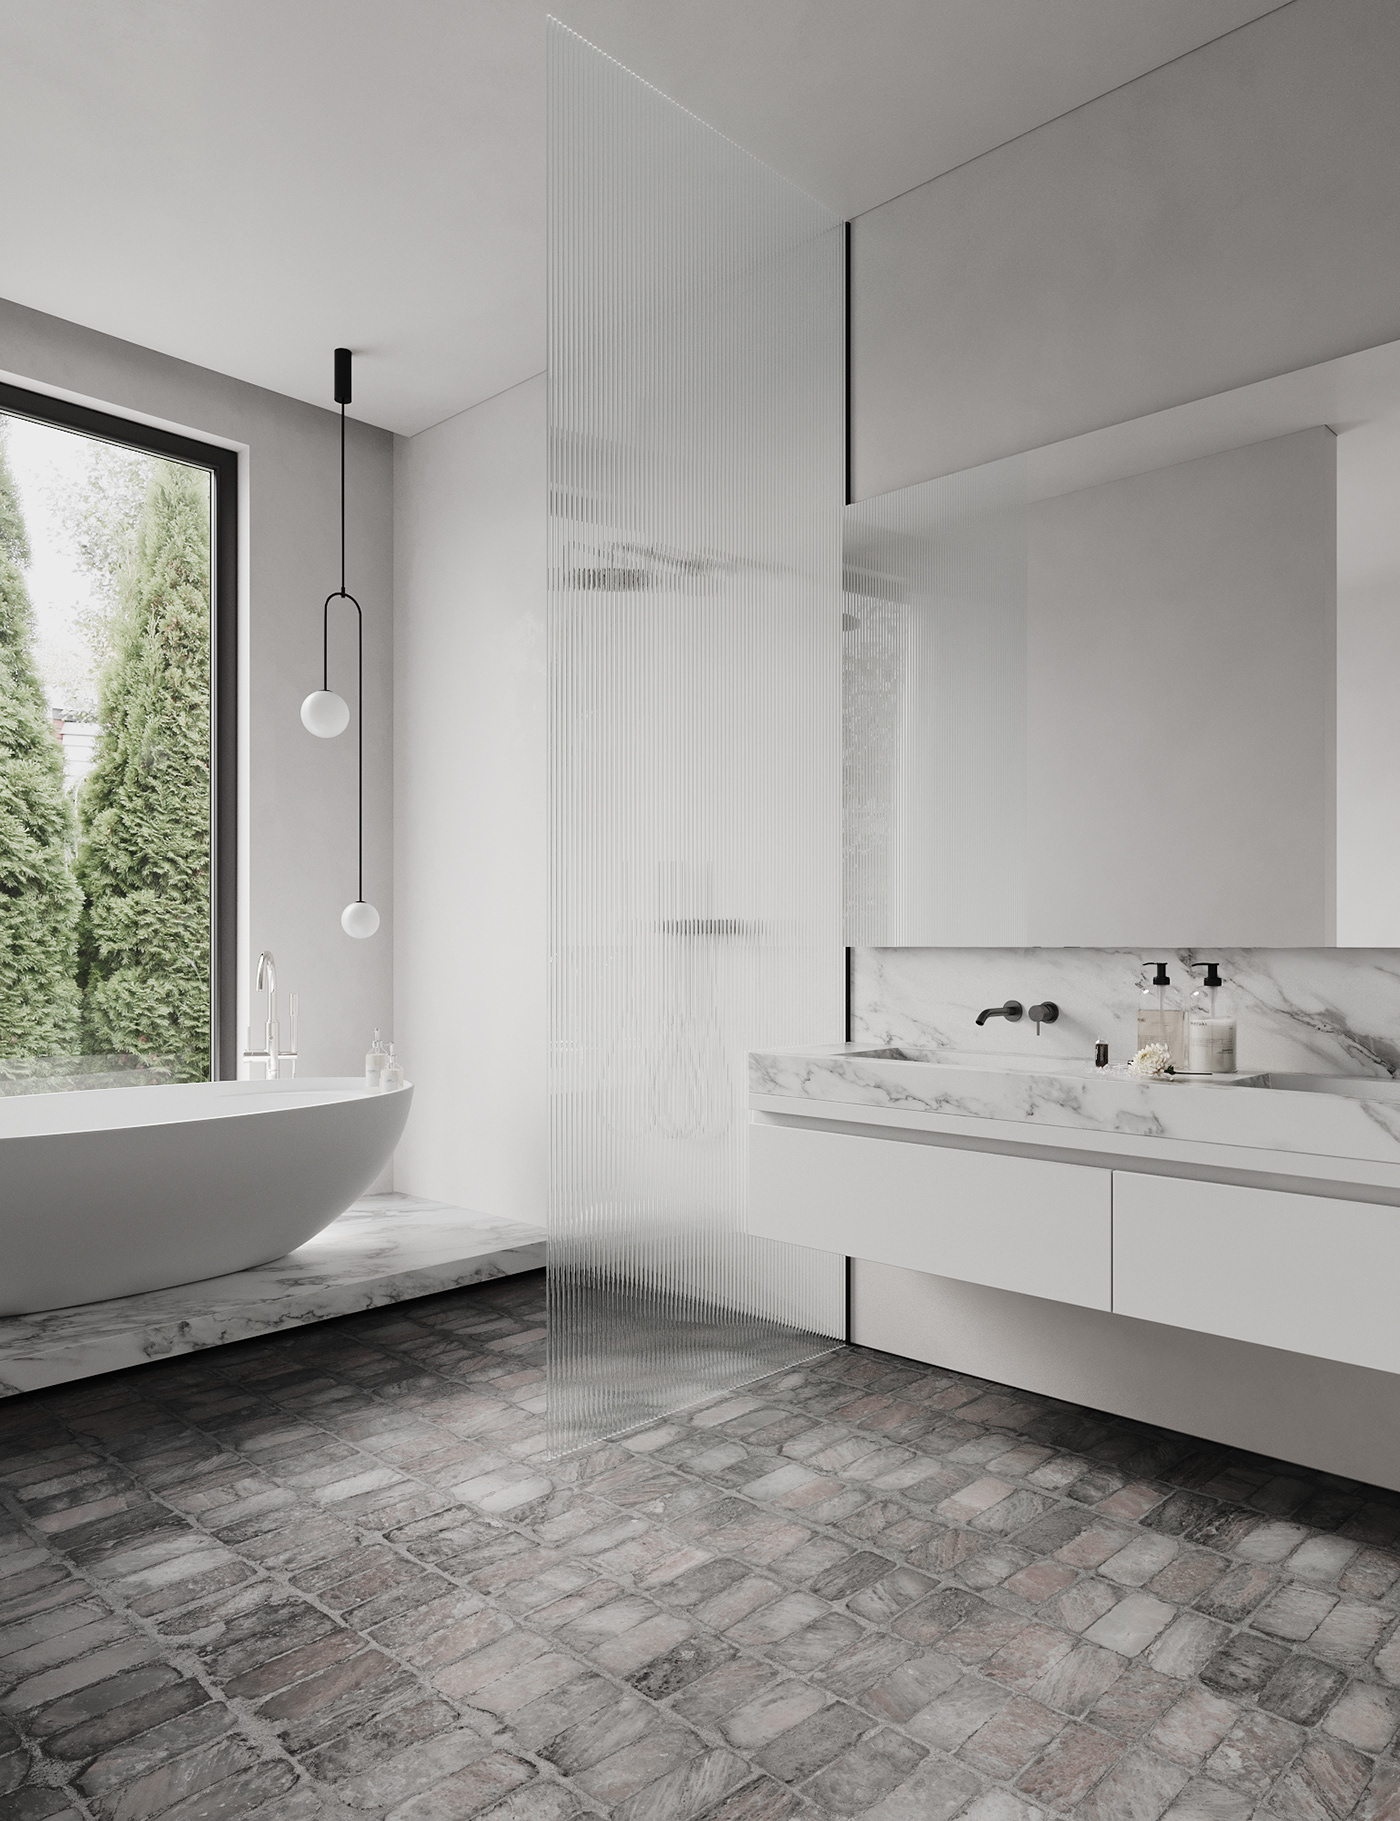 3dsmax bathroom CG concept coronarnder design INTRIORDESIGN Marble Minimalism visualization